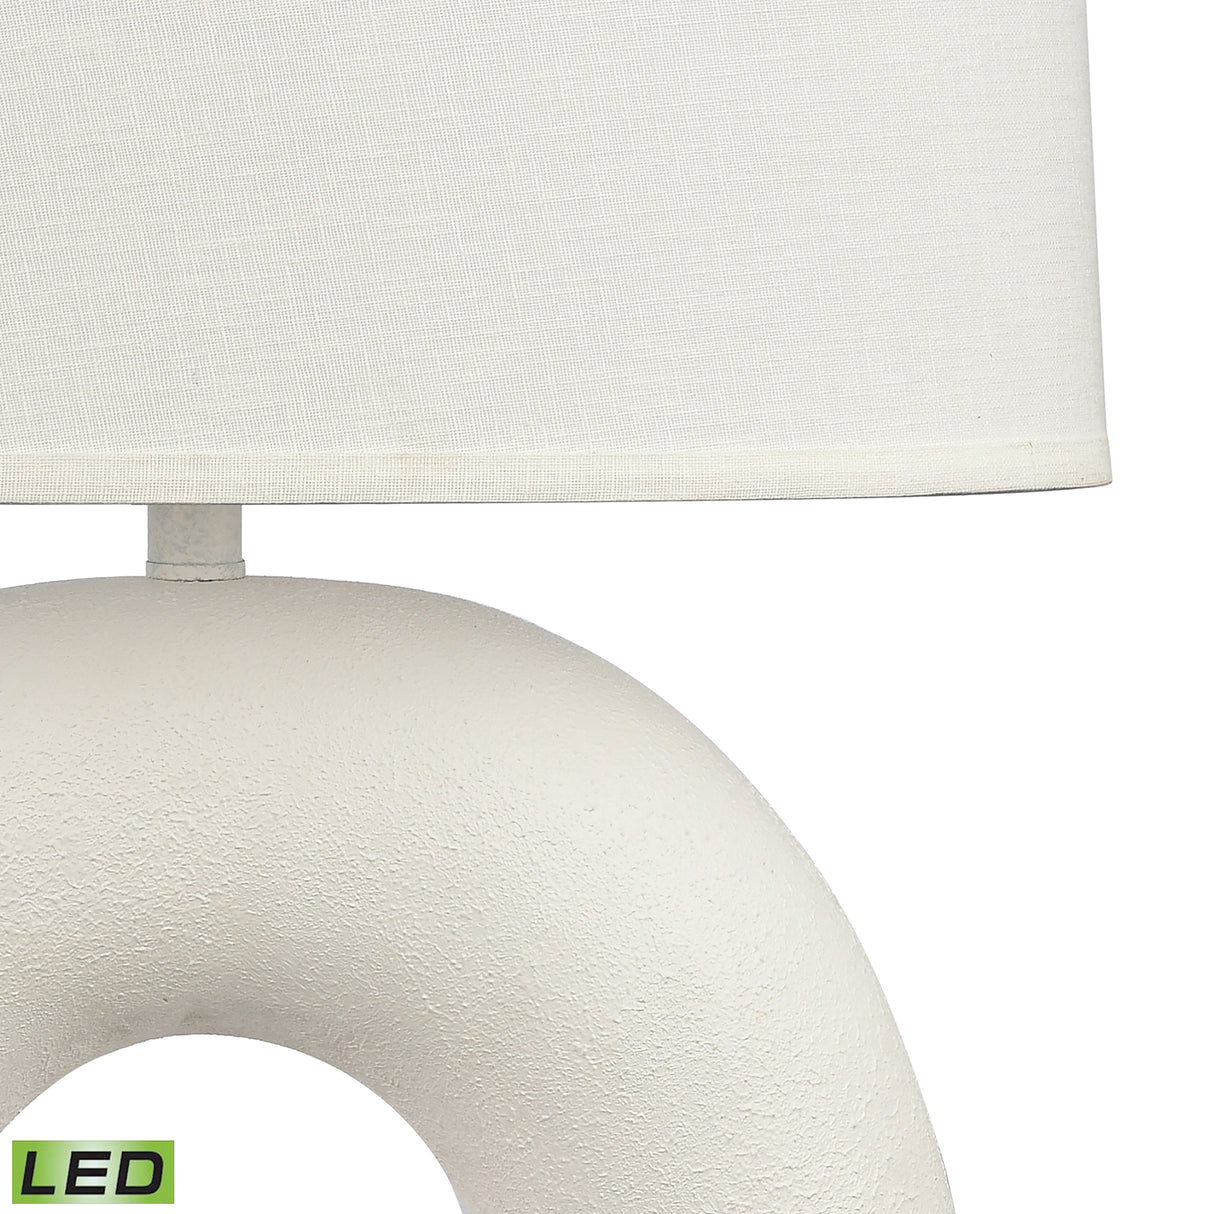 Elk H0019-9532-LED Flection 25'' High 1-Light Table Lamp - Includes LED Bulb